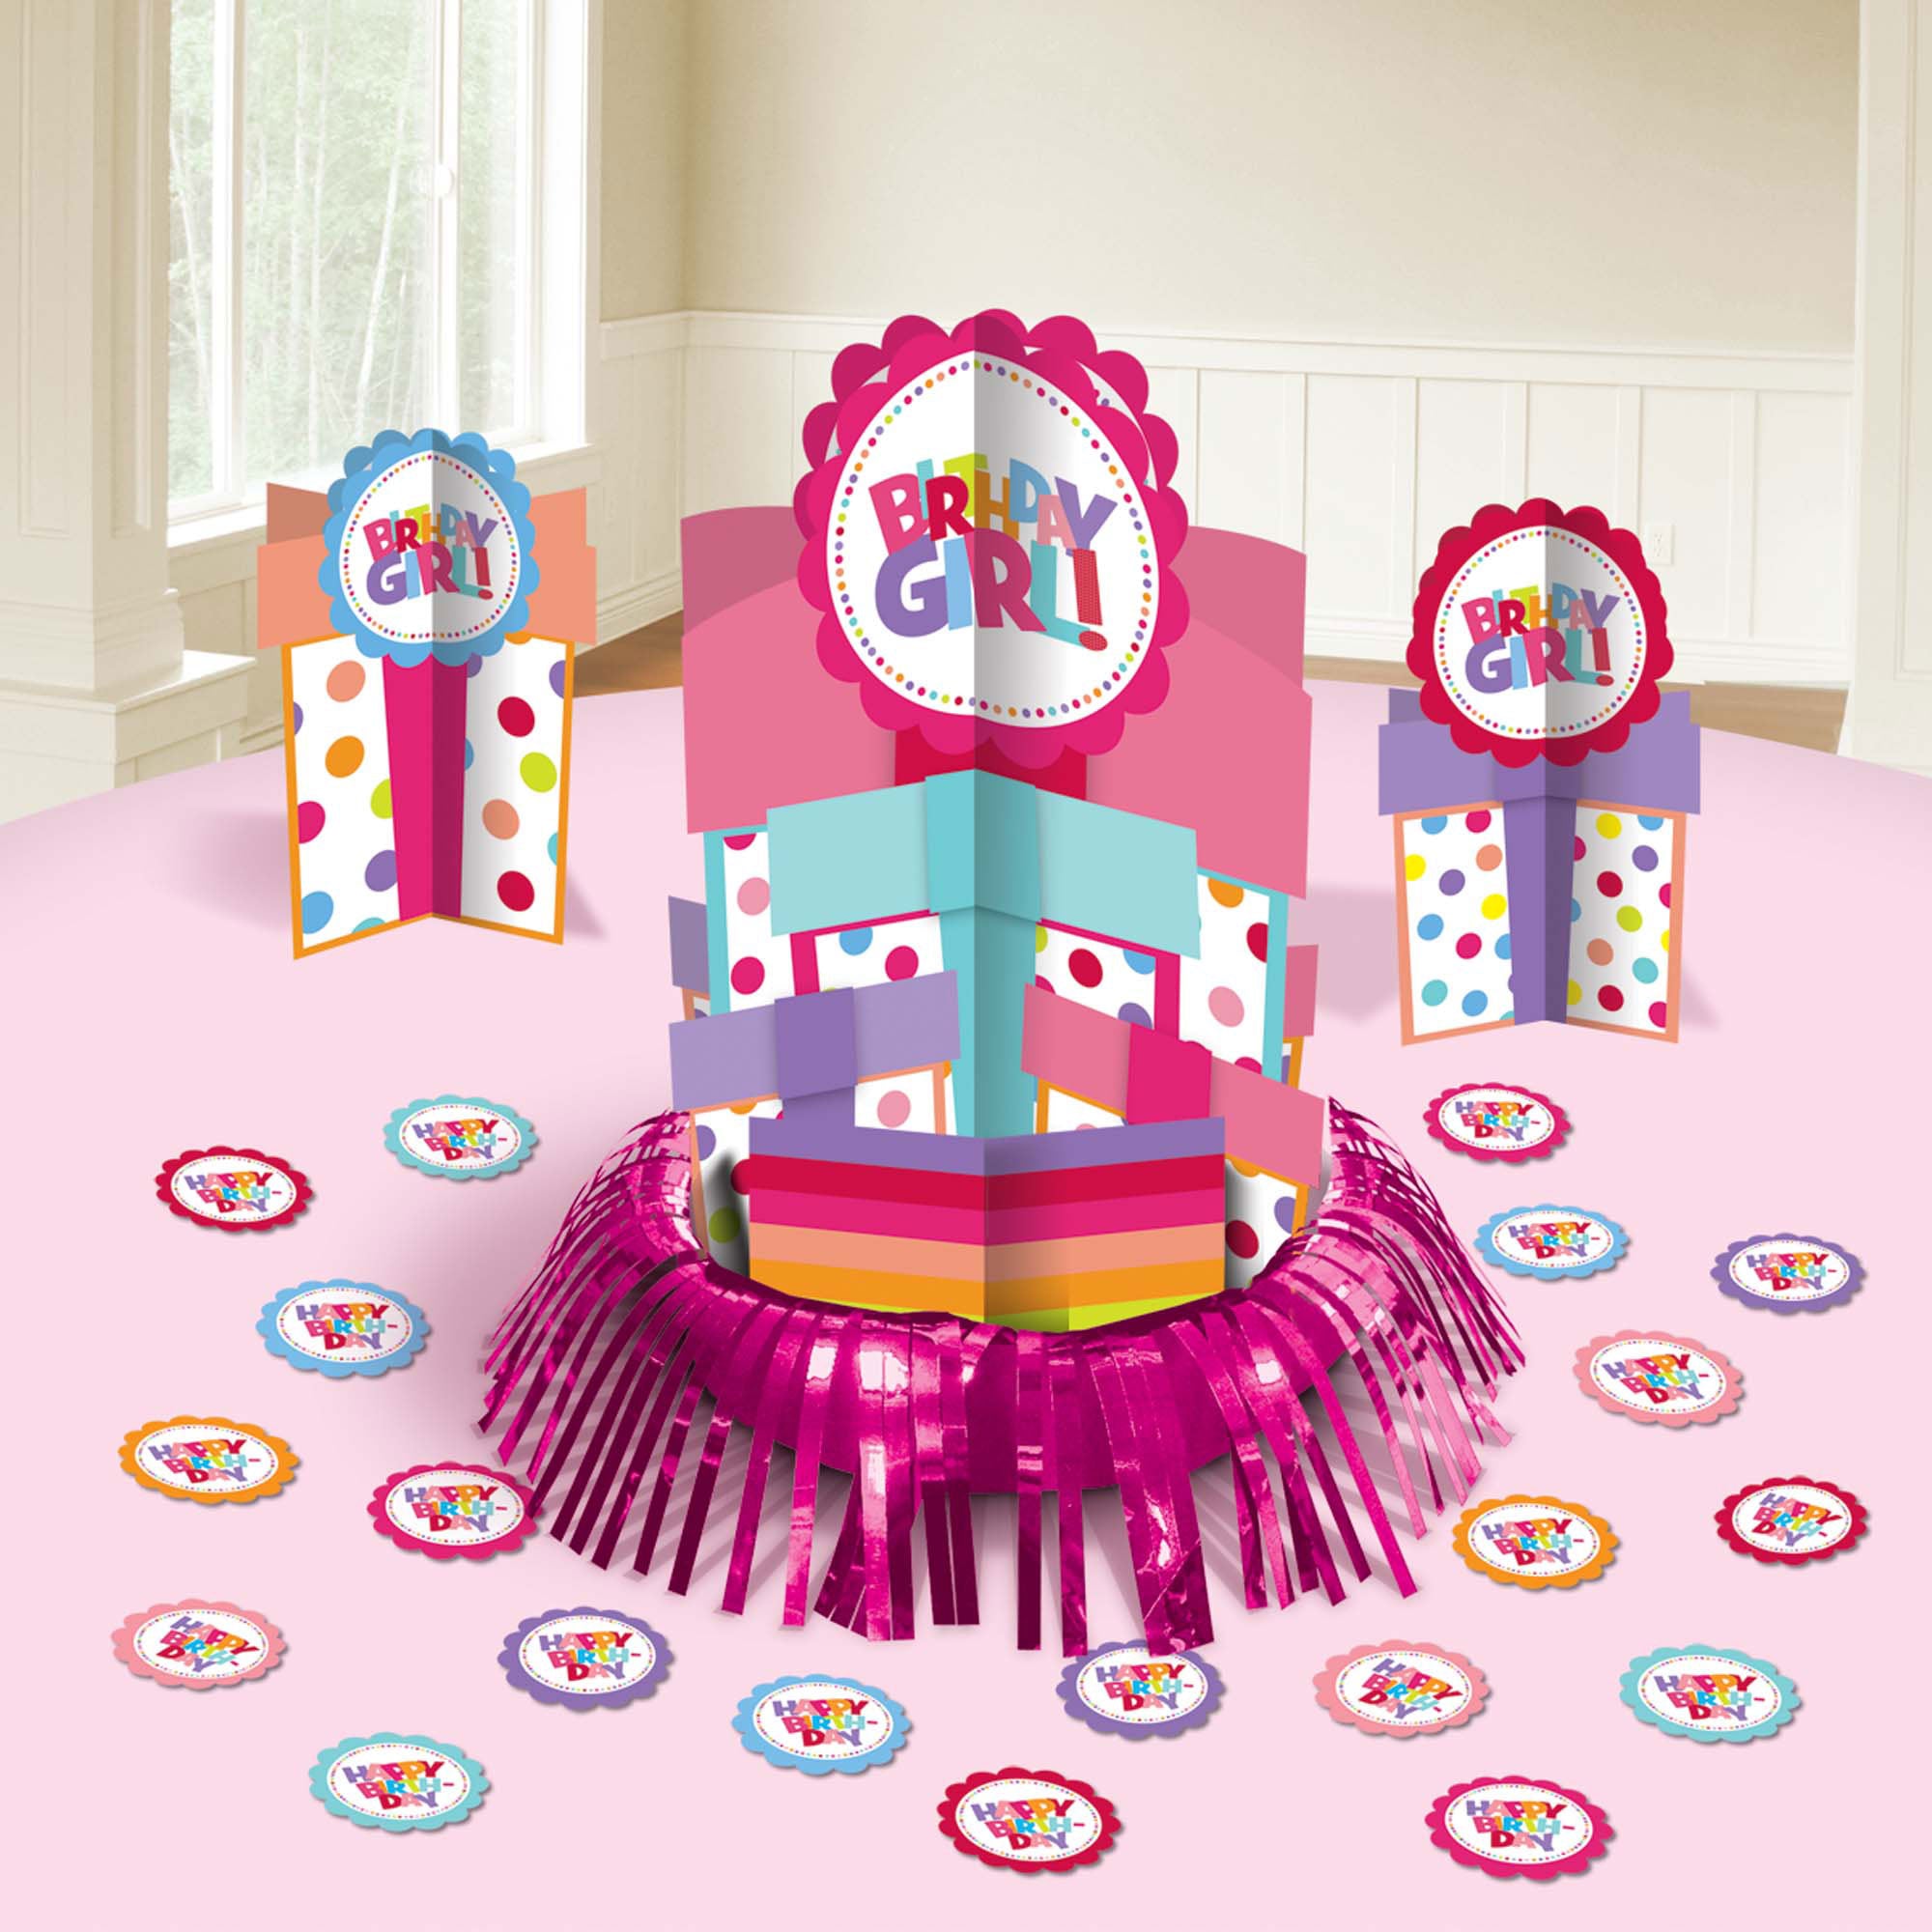 Happy Birthday Girl Table Decorating Kit